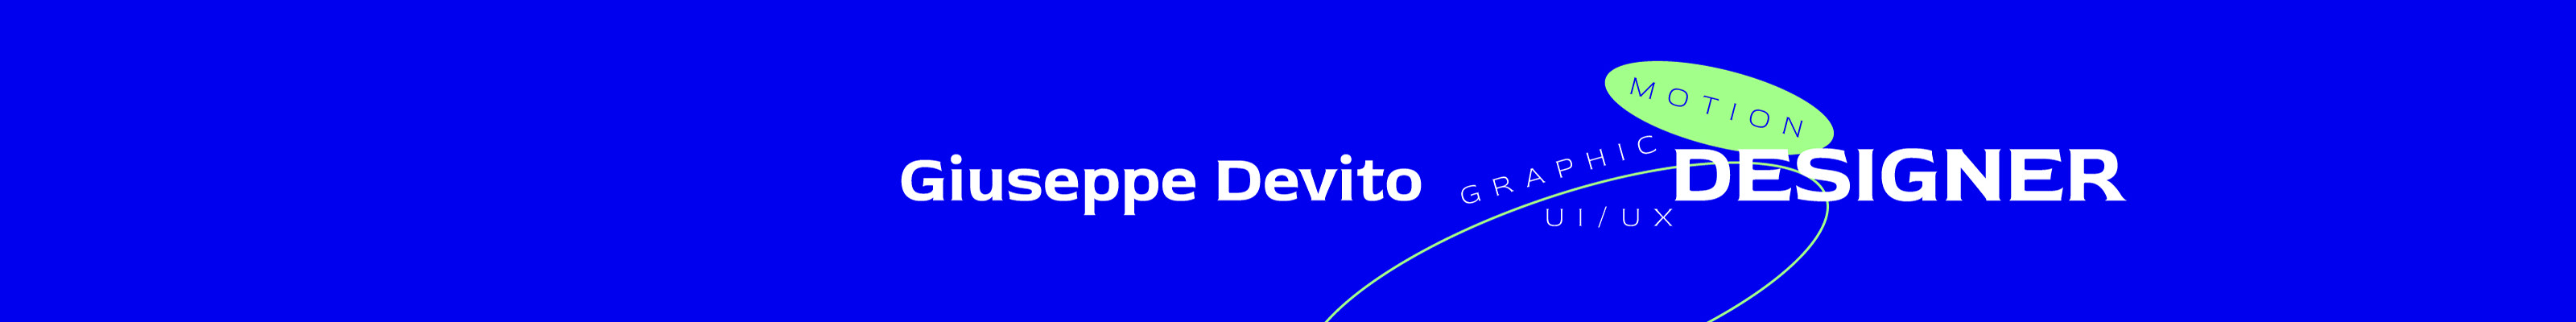 Giuseppe Devito's profile banner